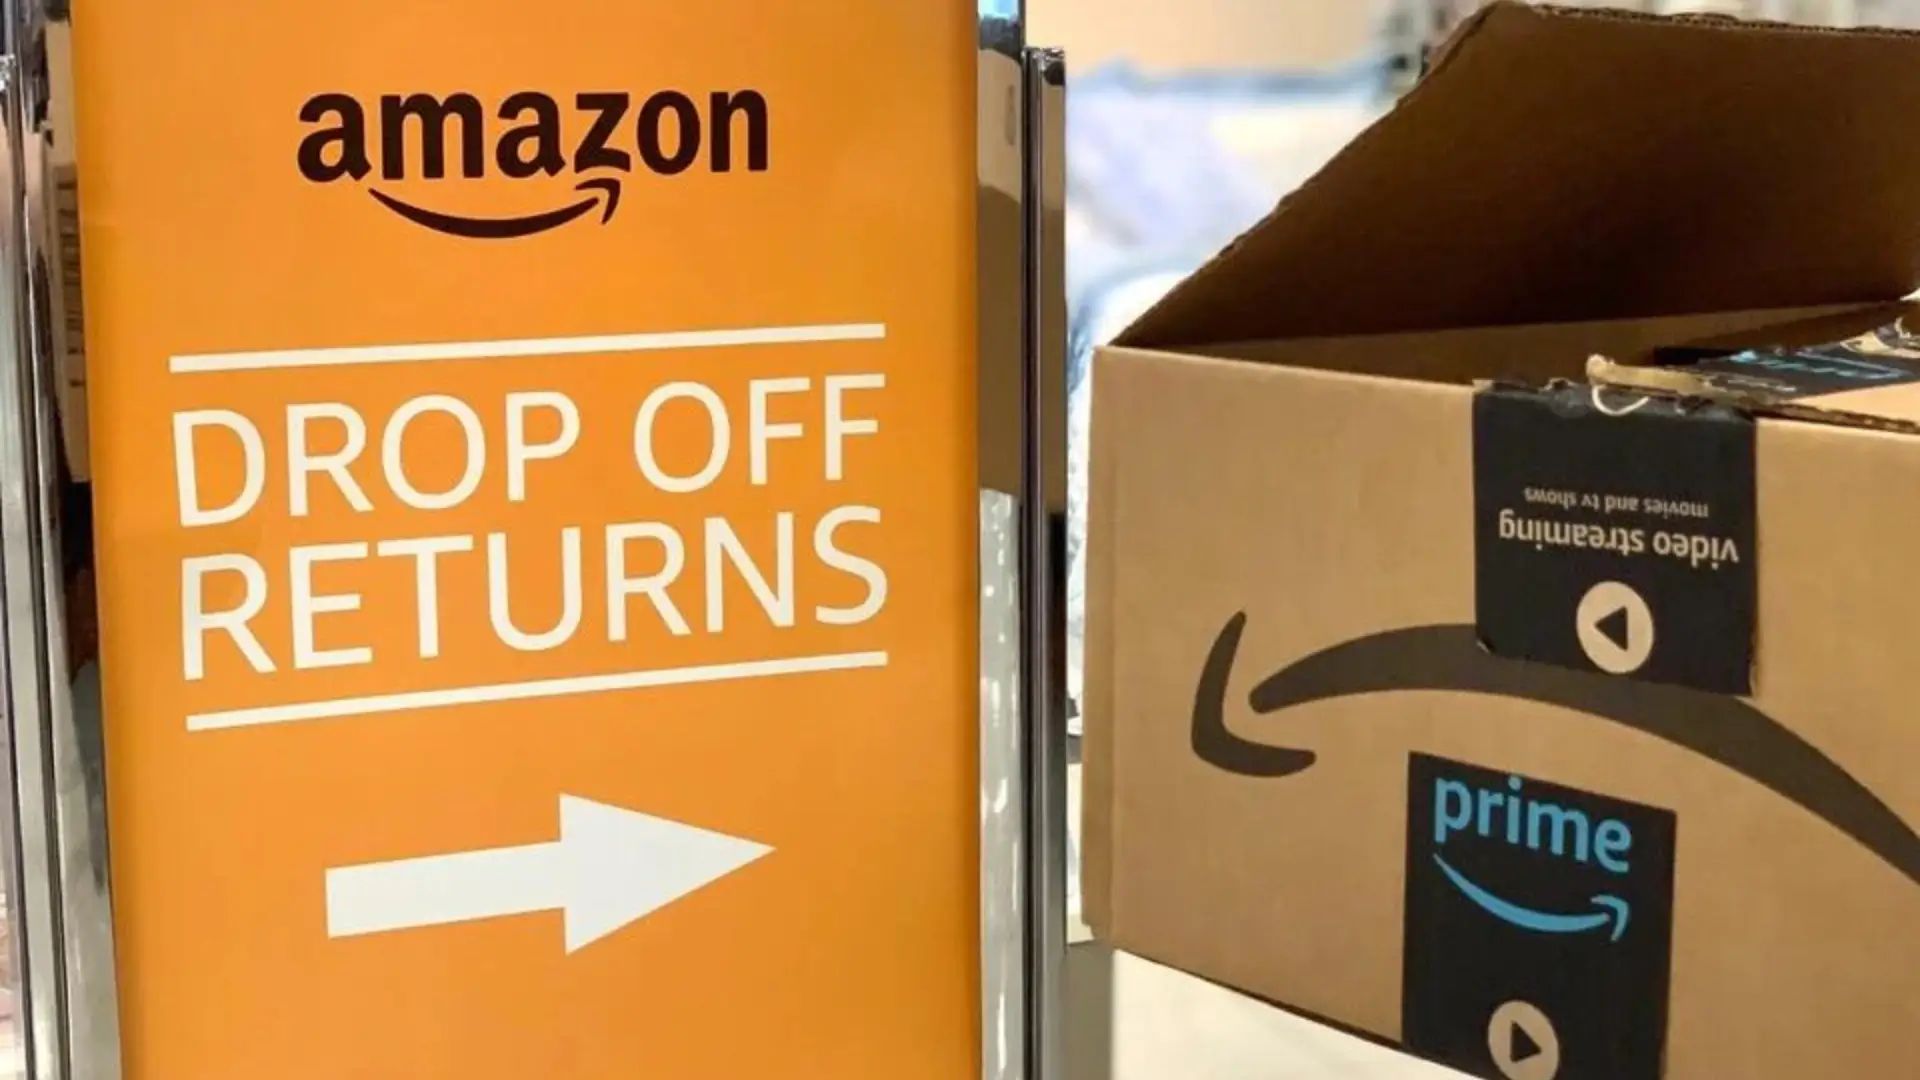 Amazon Drop Off Returns location.